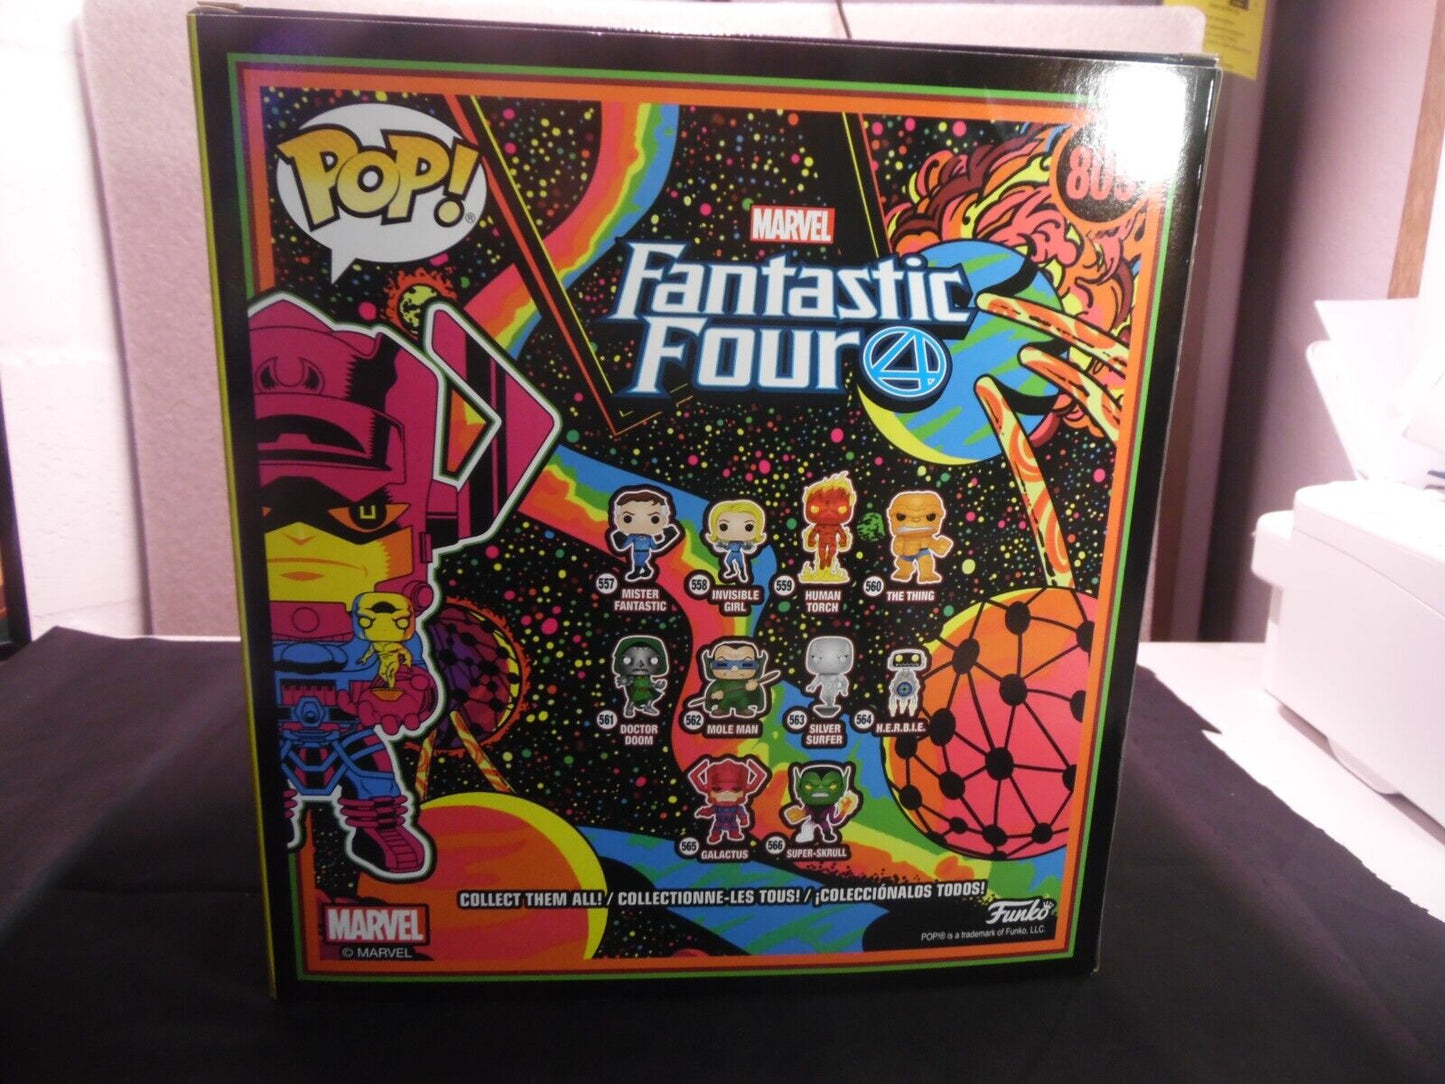 Funko Pop Marvel Galactus with Silver Surfer 809 Black Light 10" Fantastic Four